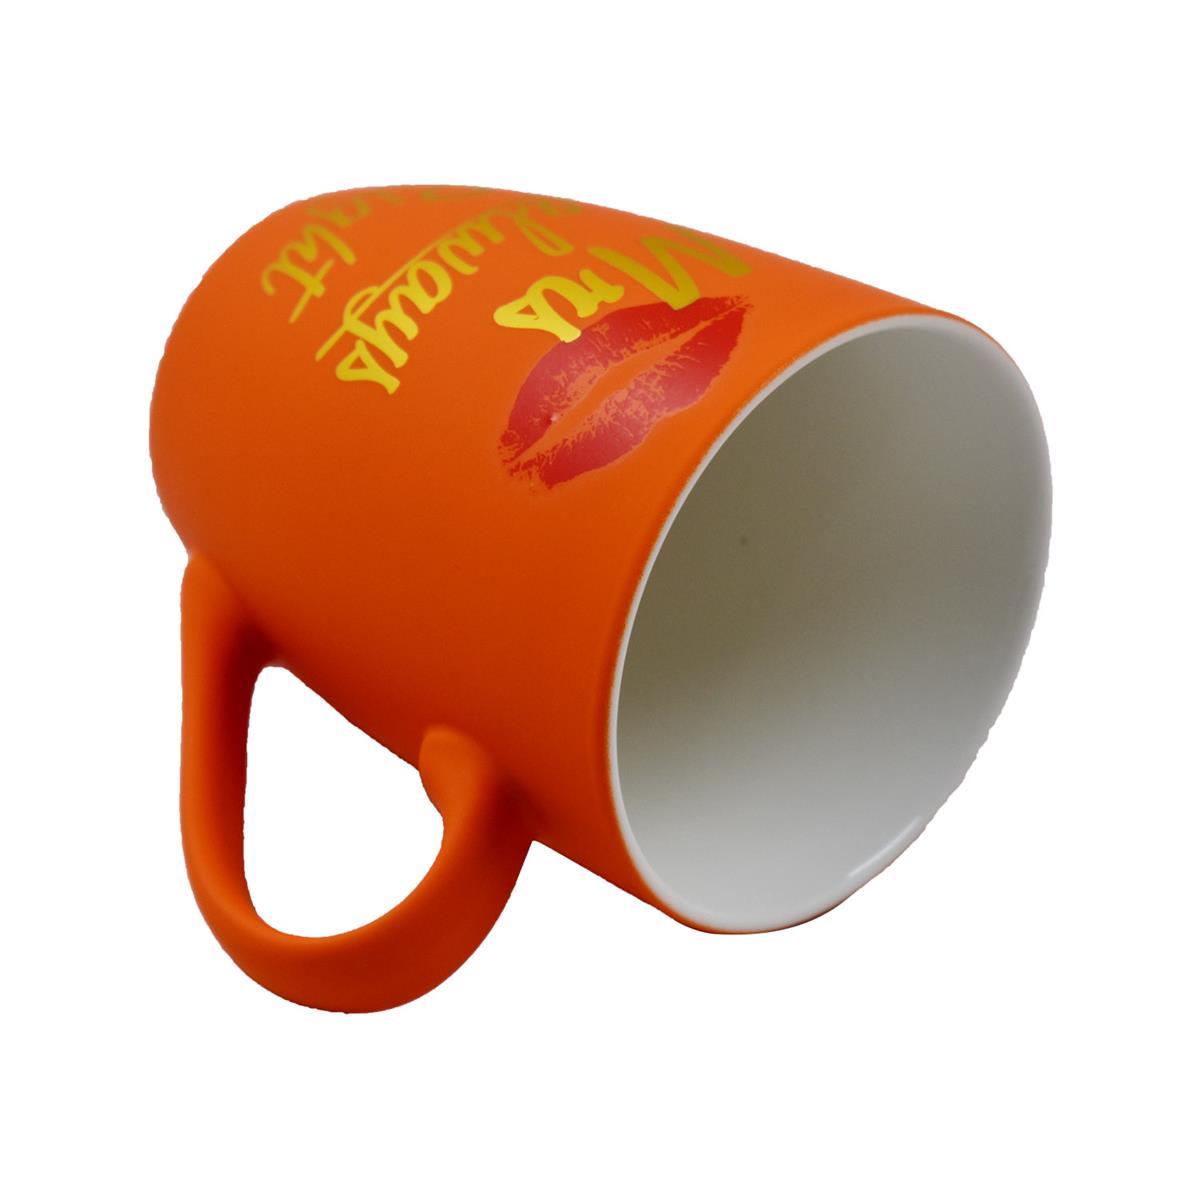 Printed Ceramic Coffee or Tea Mug with handle - 325ml (BPY190-C)